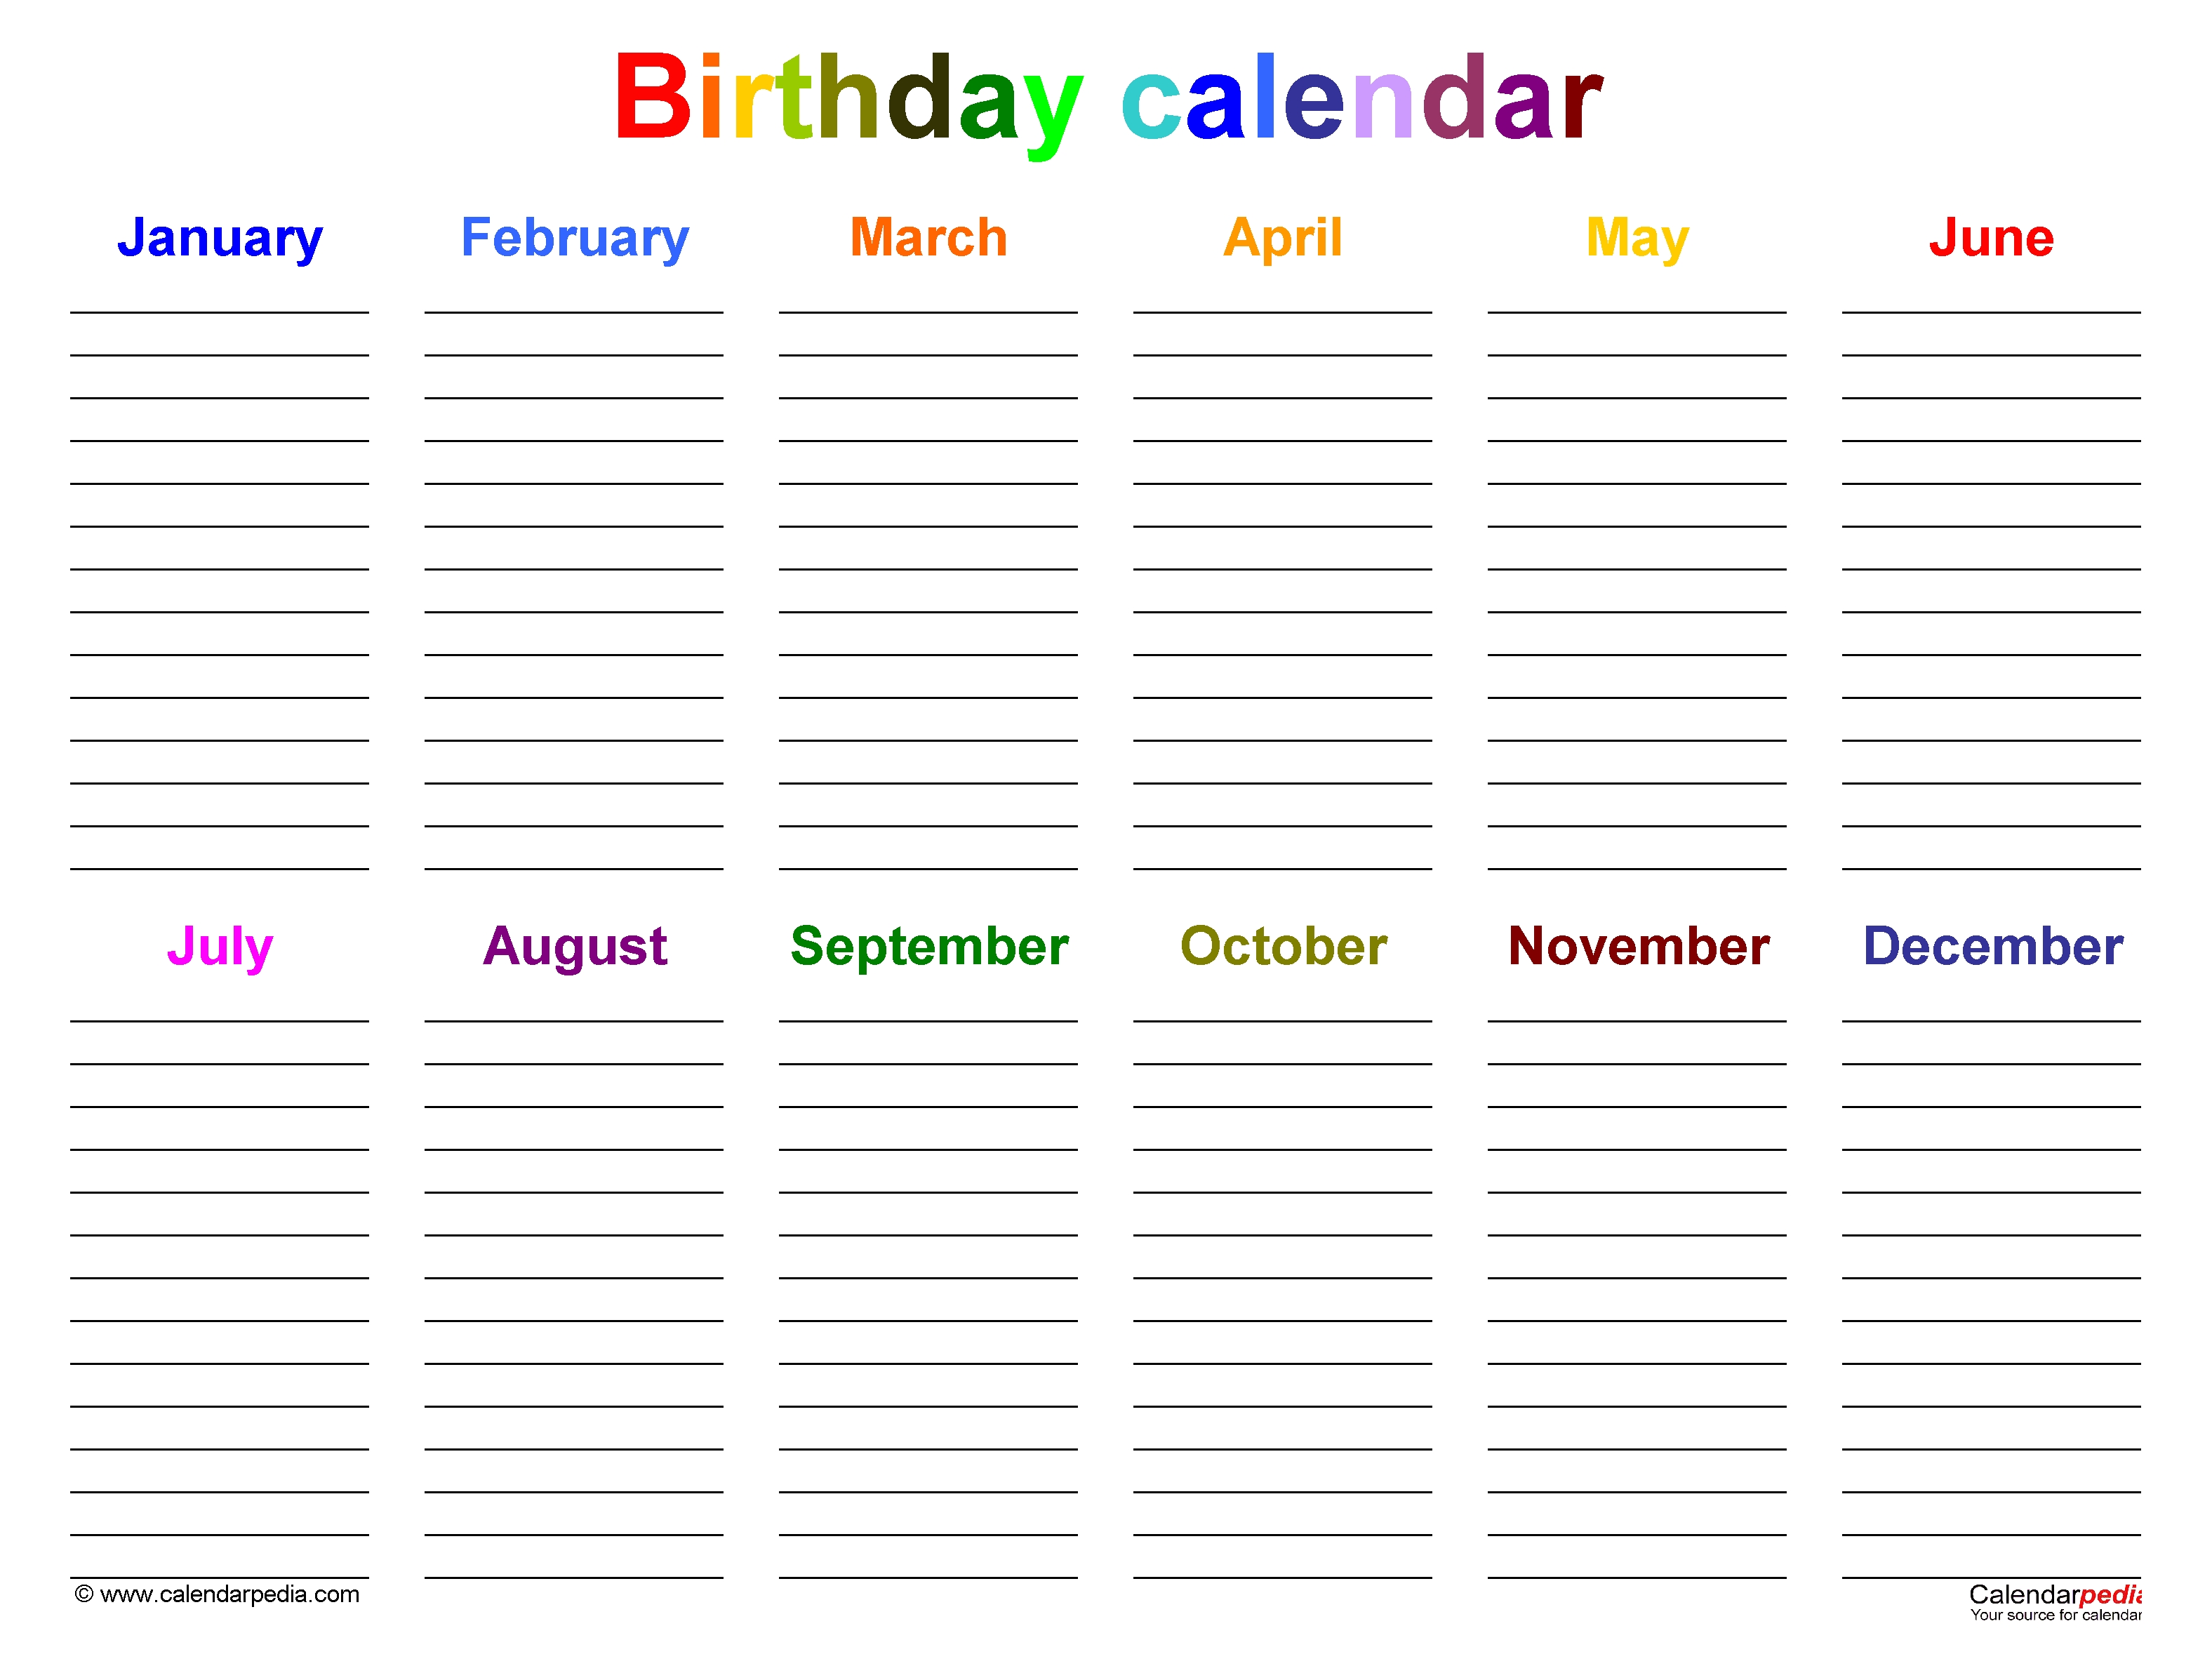 Birthday Calendar Template Free Printable Birthday Calendar Birthday The Best Printable